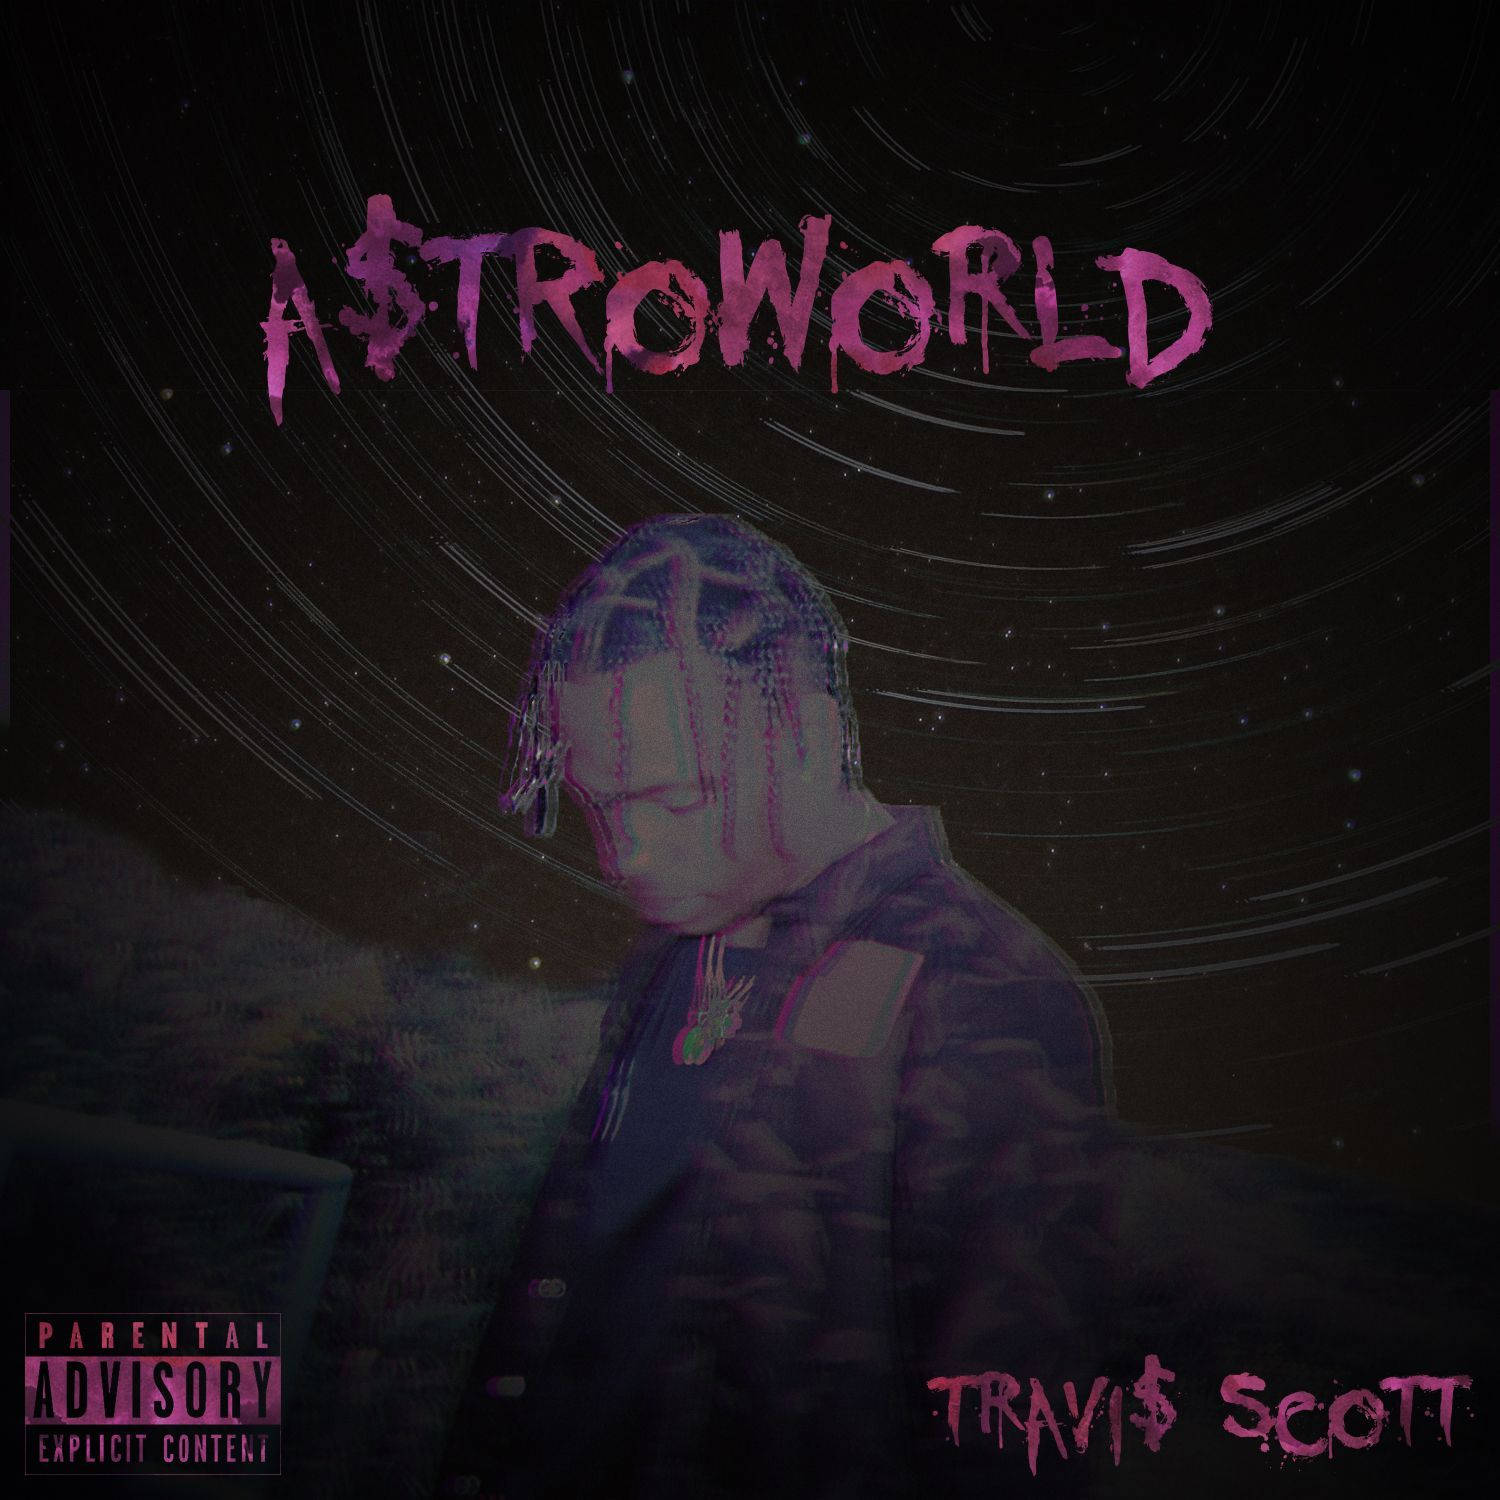 Aesthetic Art Astroworld Of Travis Scott